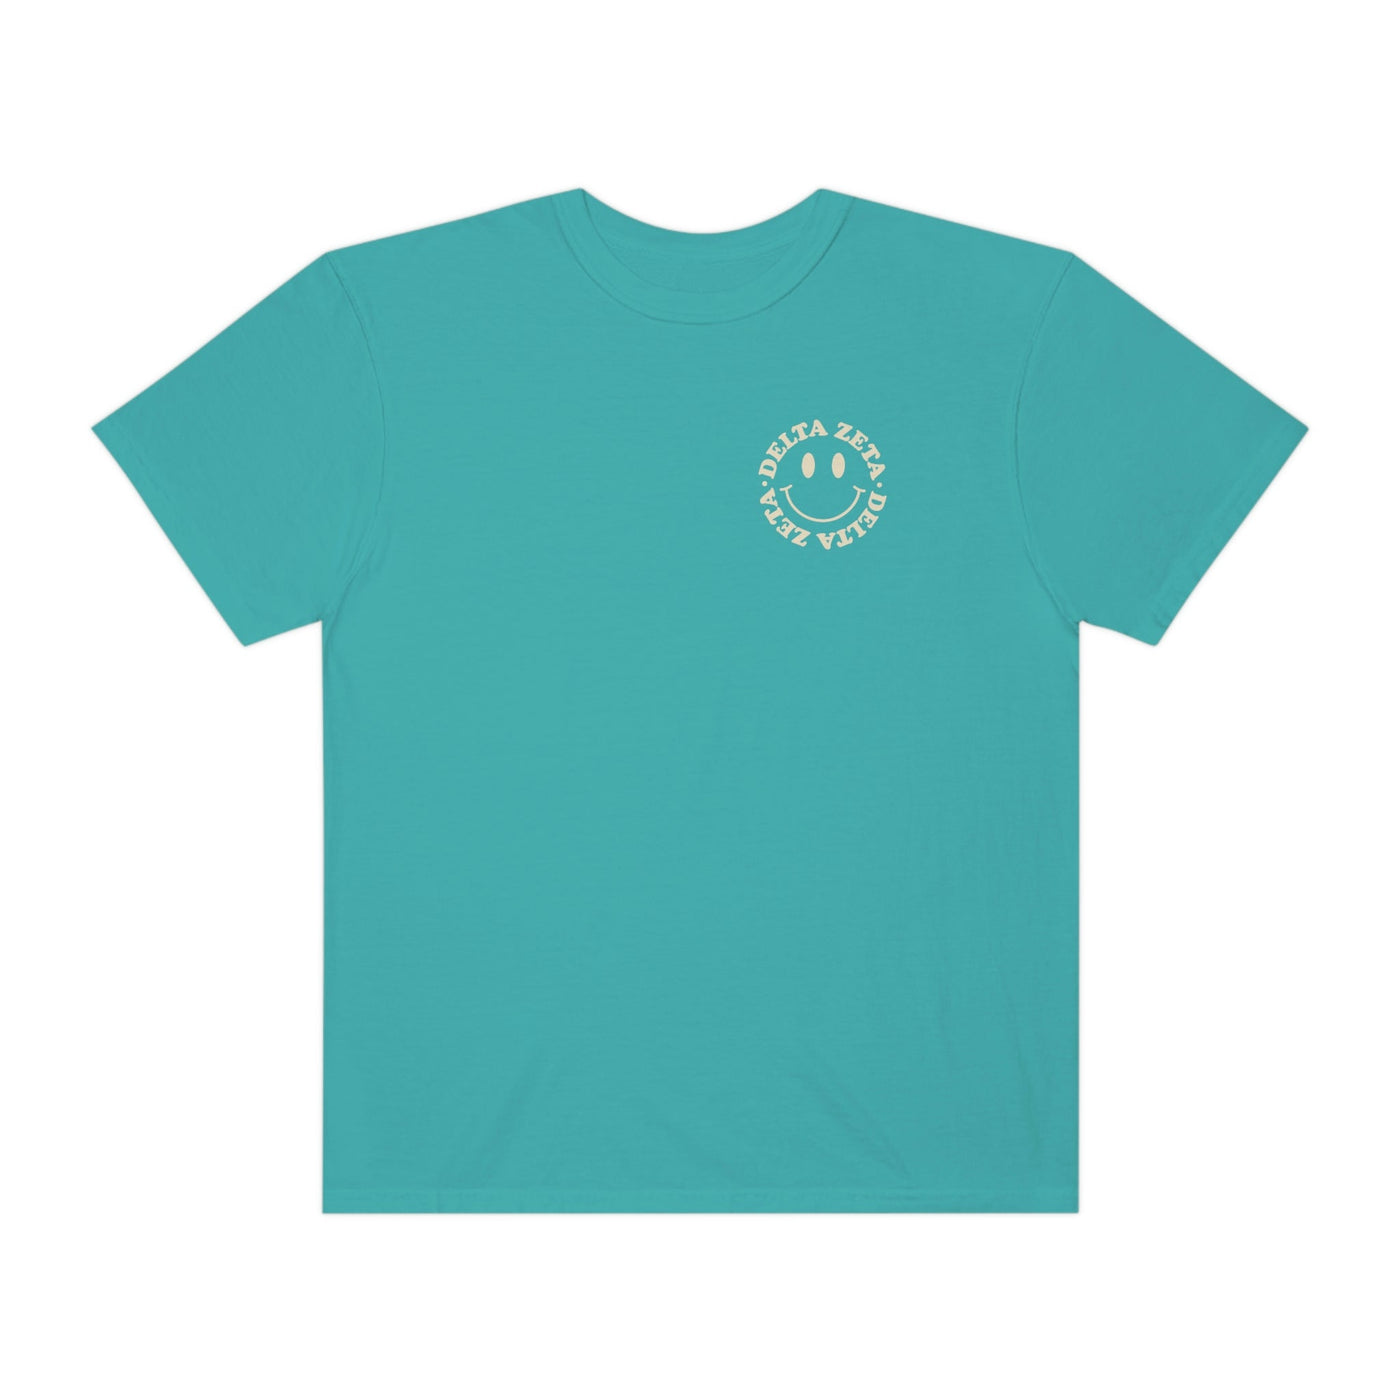 Delta Zeta Smile Sorority Comfy T-Shirt